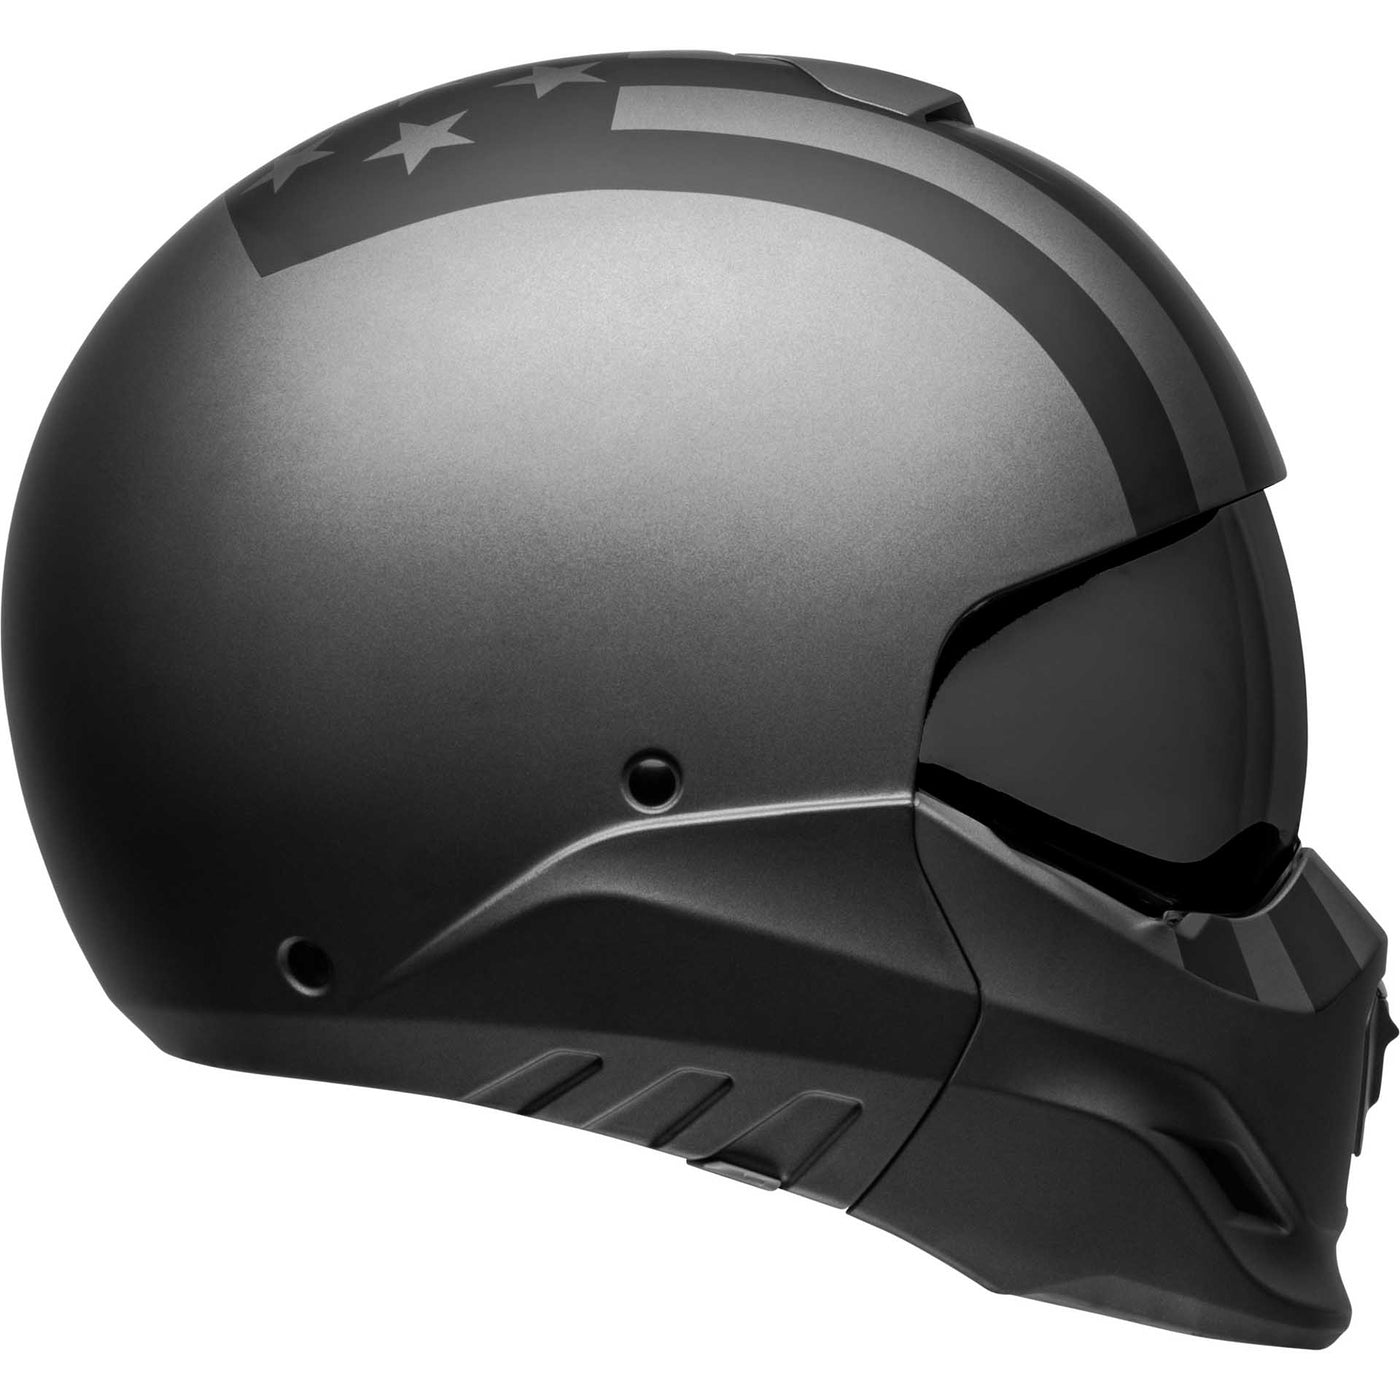 Bell Broozer Motorcycle Full Face Helmet Free Ride Matte Gray/Black